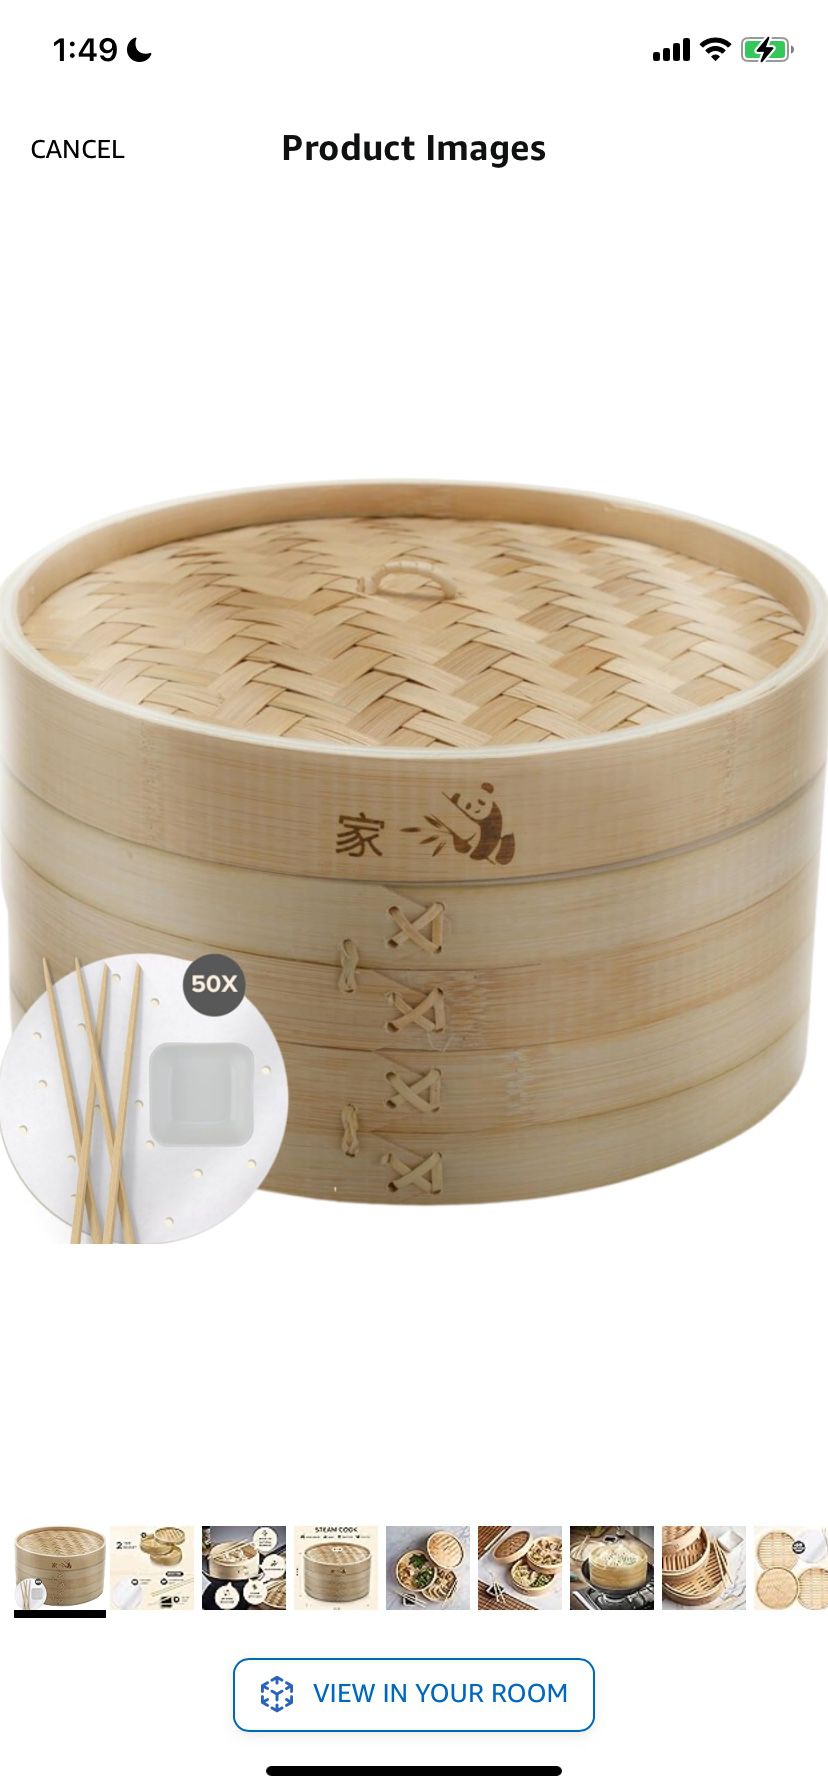  Bamboo Steamer Basket